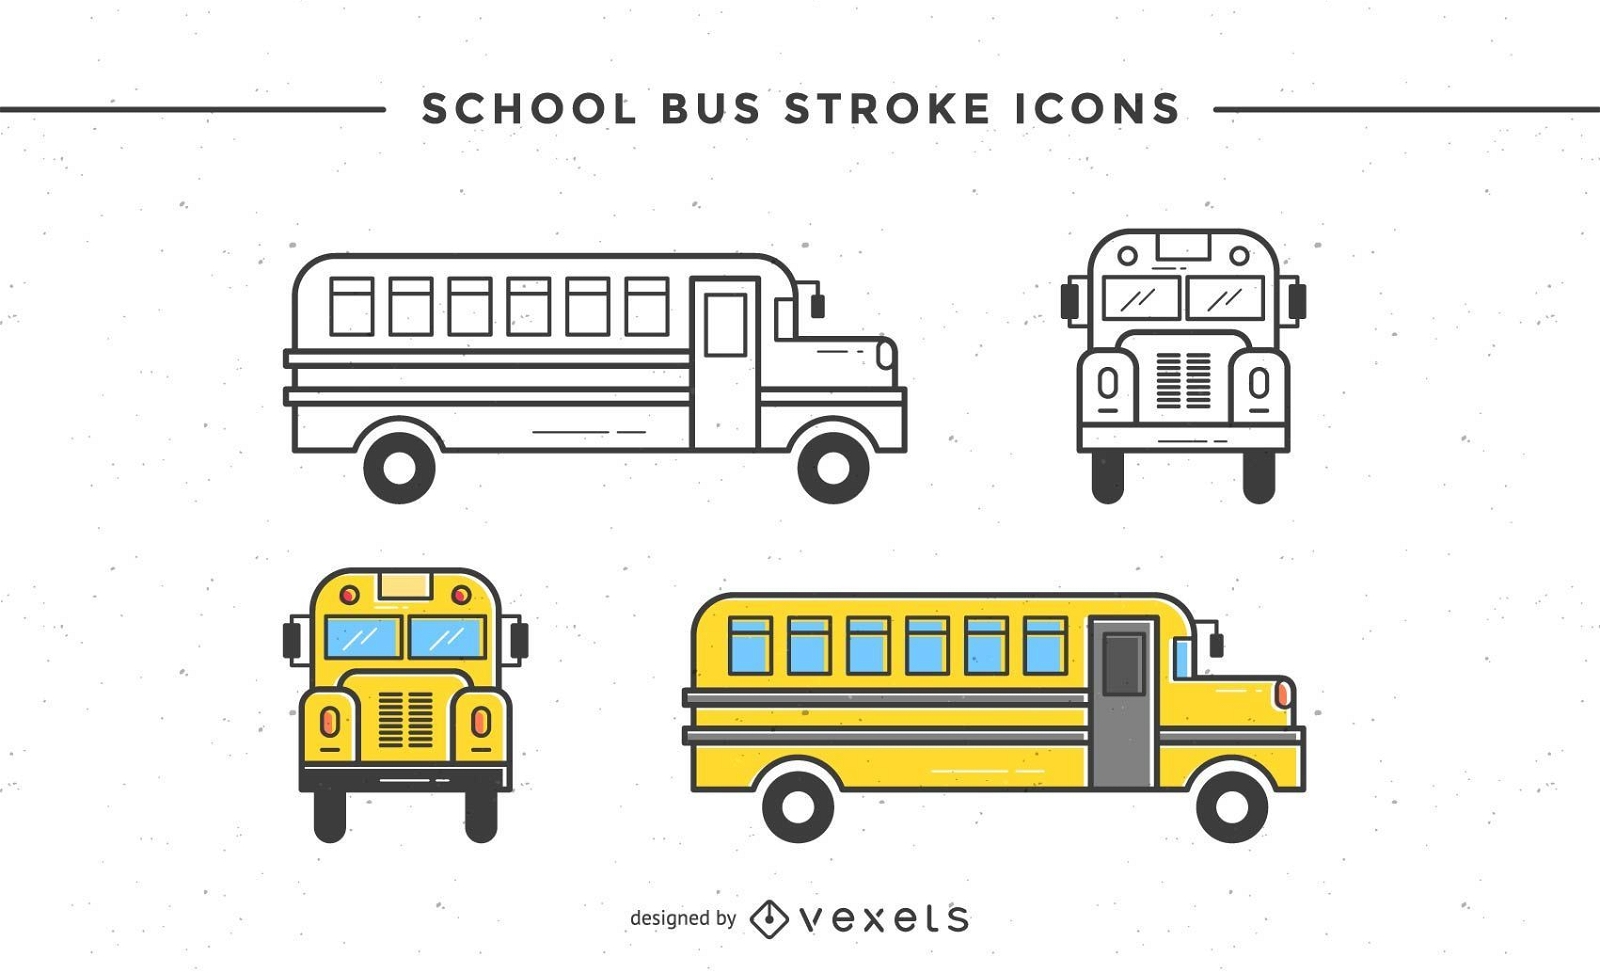 School bus stroke icons set